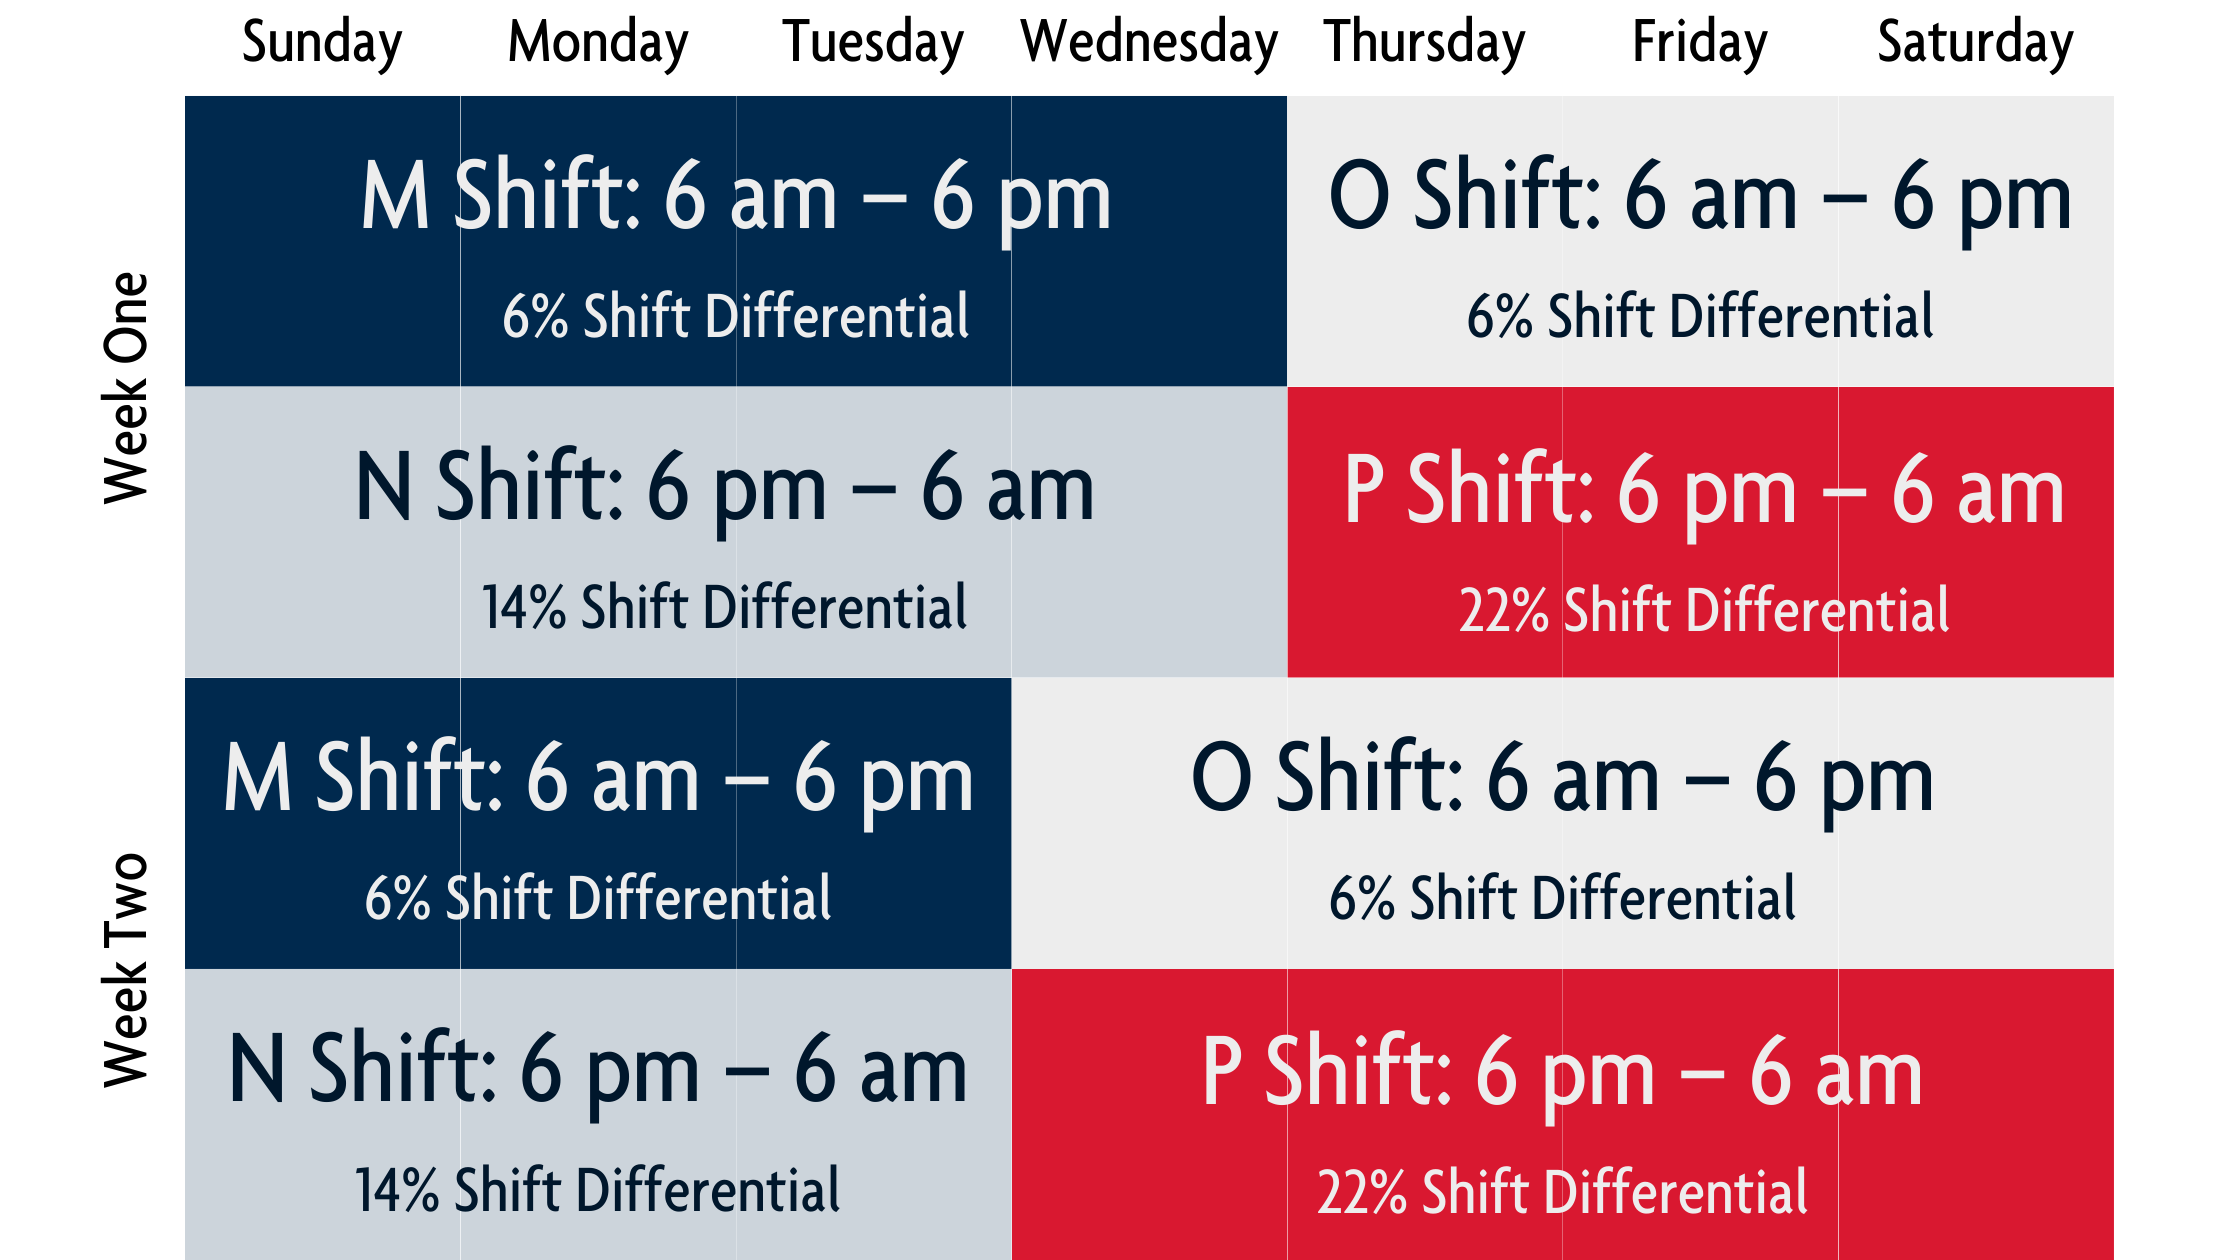 Equipment Maintenance Technician shift schedules - Polar Semiconductor